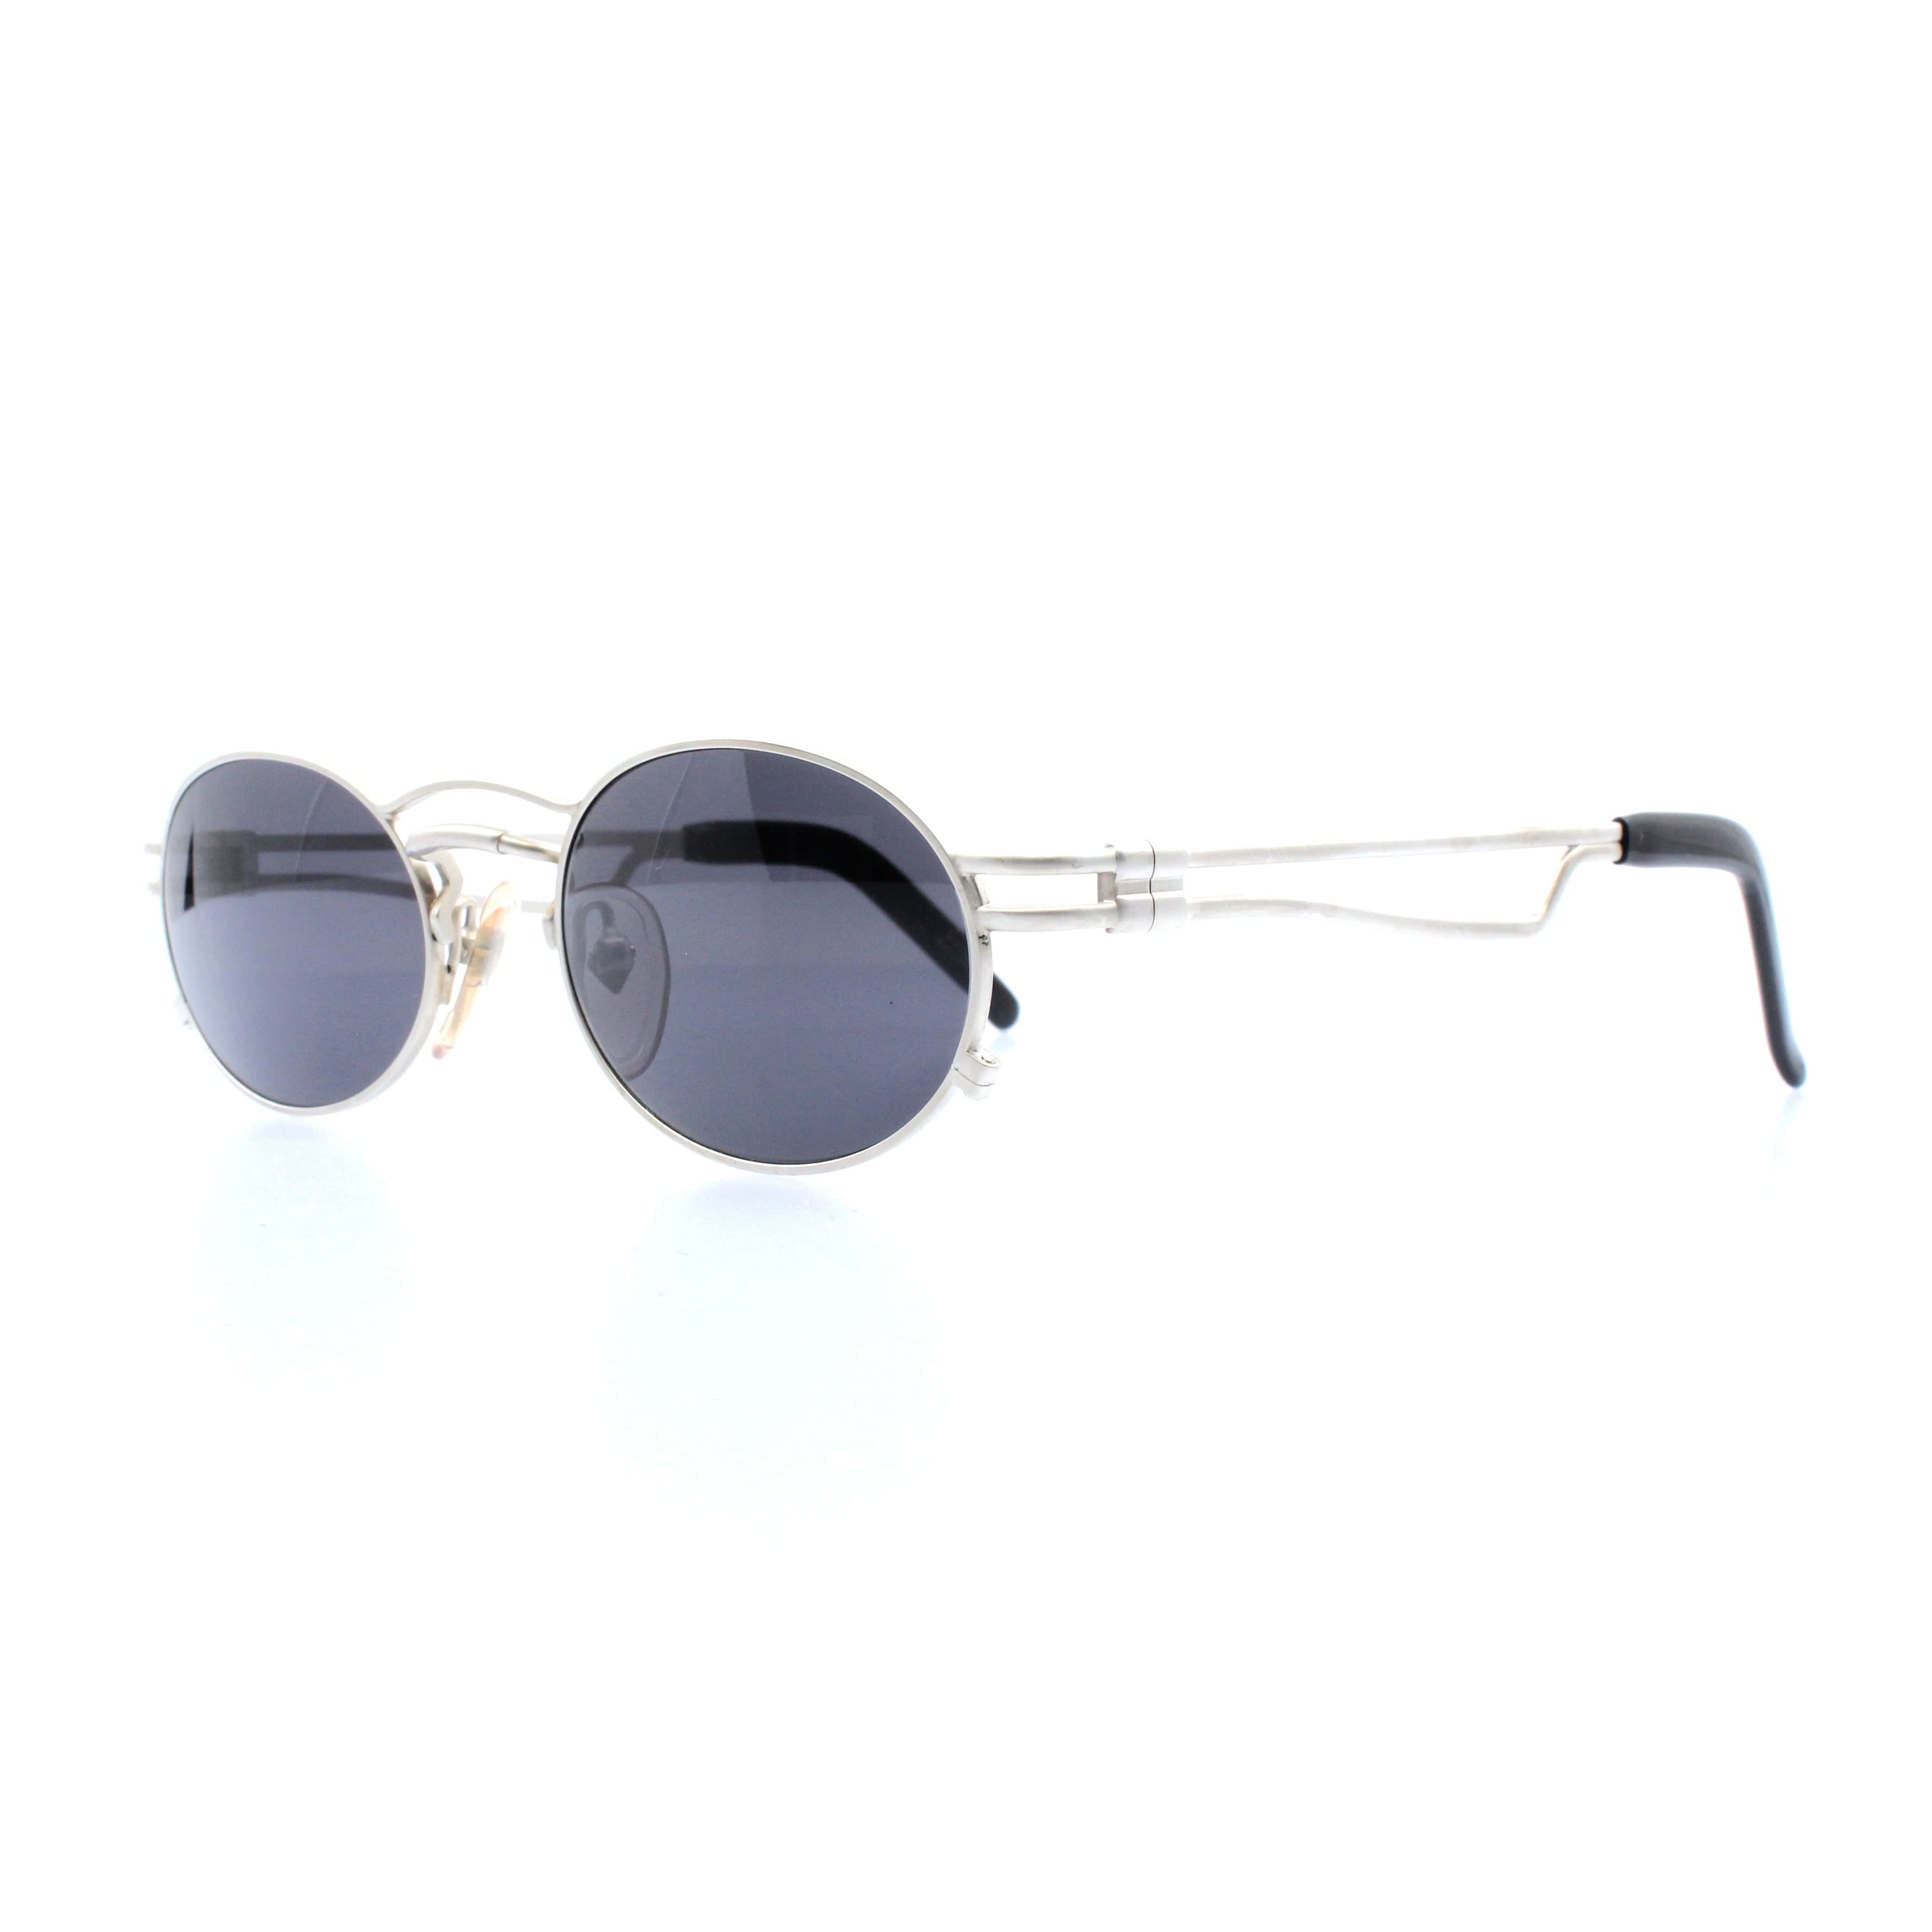 Vintage Jean Paul Gaultier 56-3173 Sunglasses